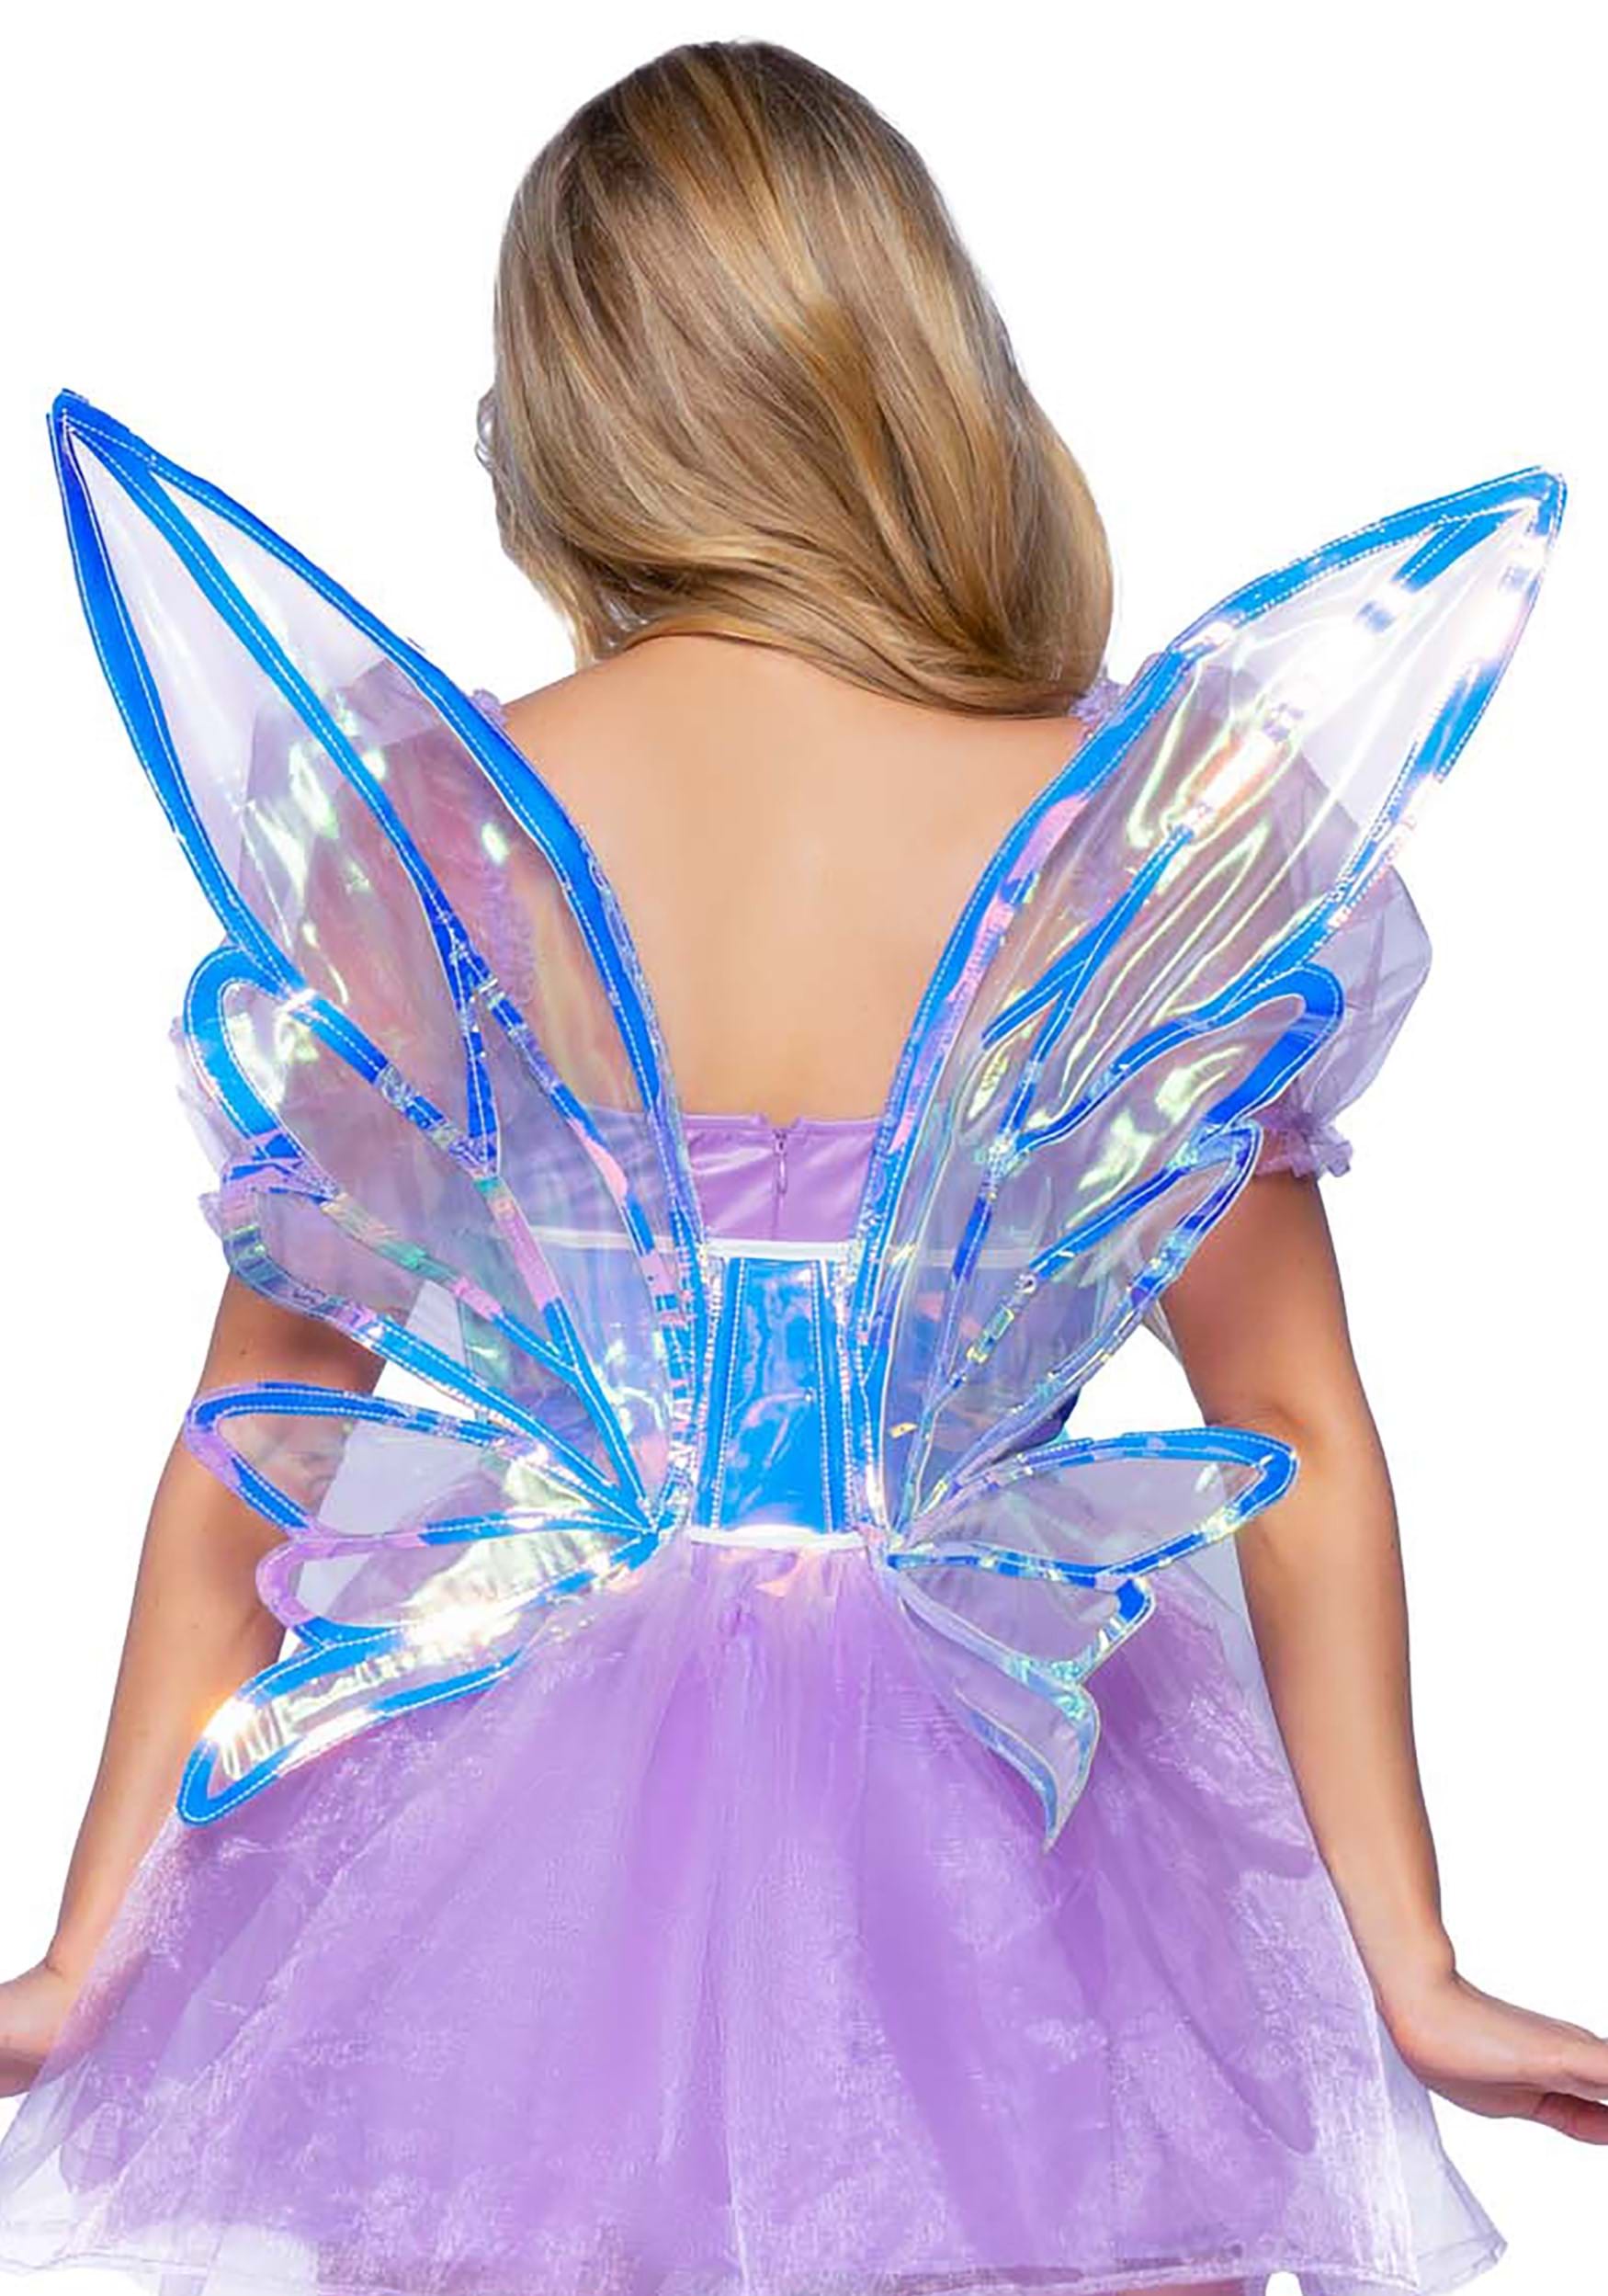 blue and purple fairy costume